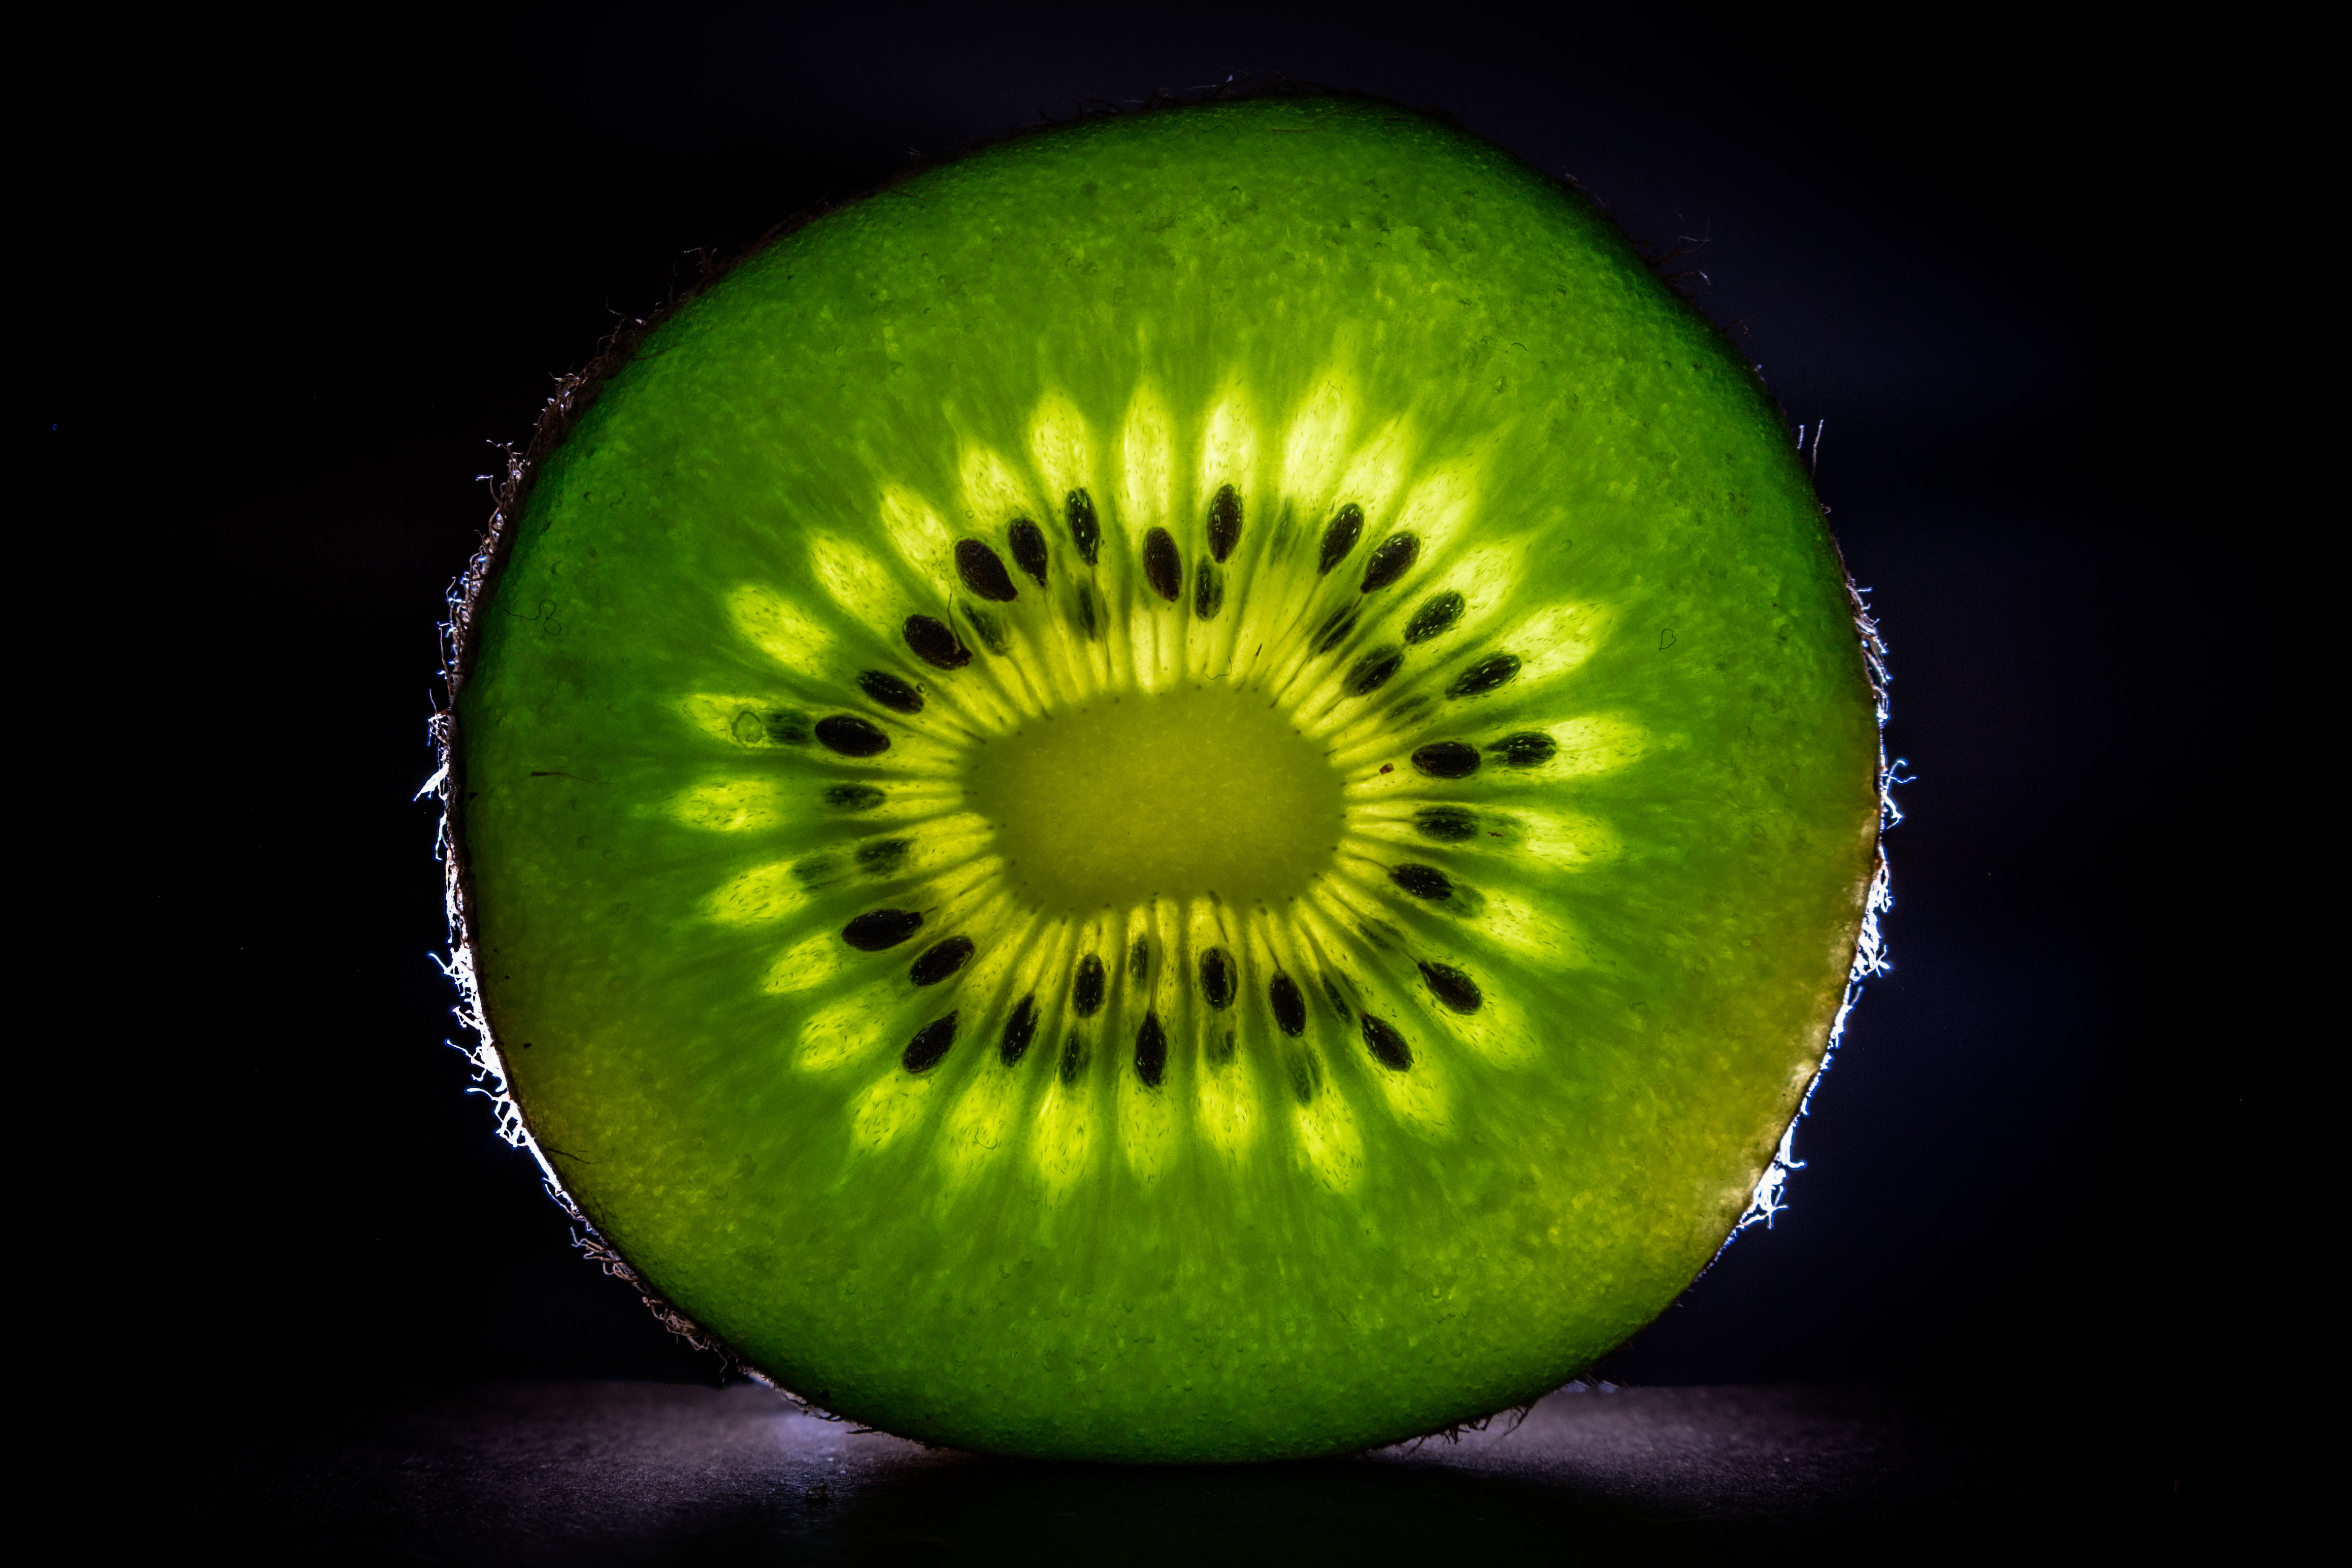 Green kiwi slice on black background